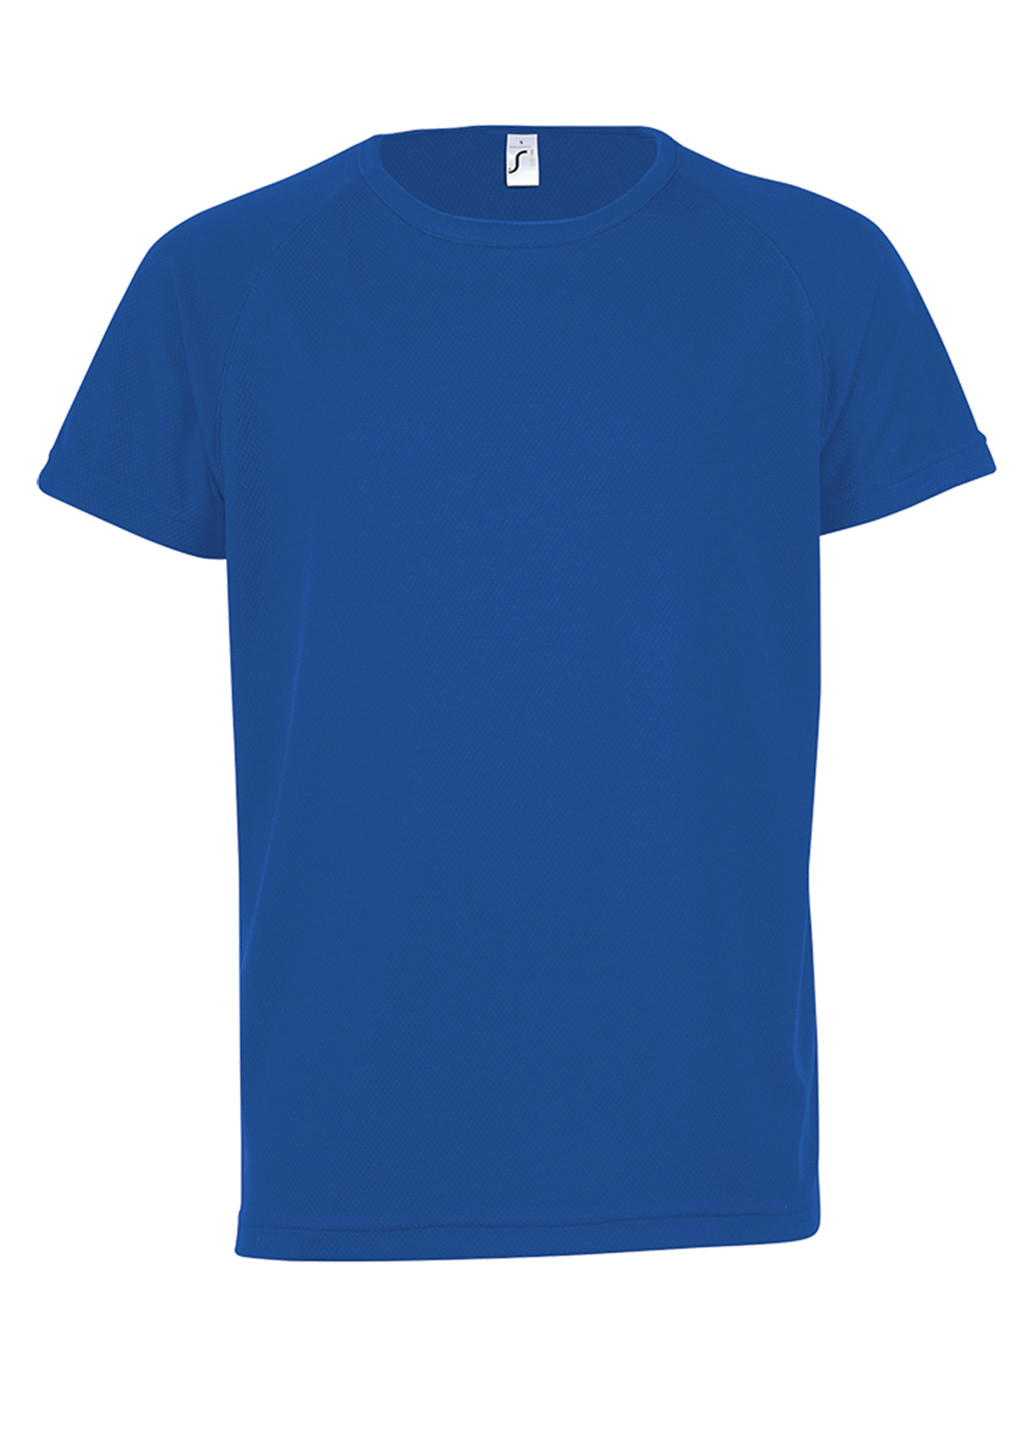 Синяя демисезонная футболка с коротким рукавом Sol's